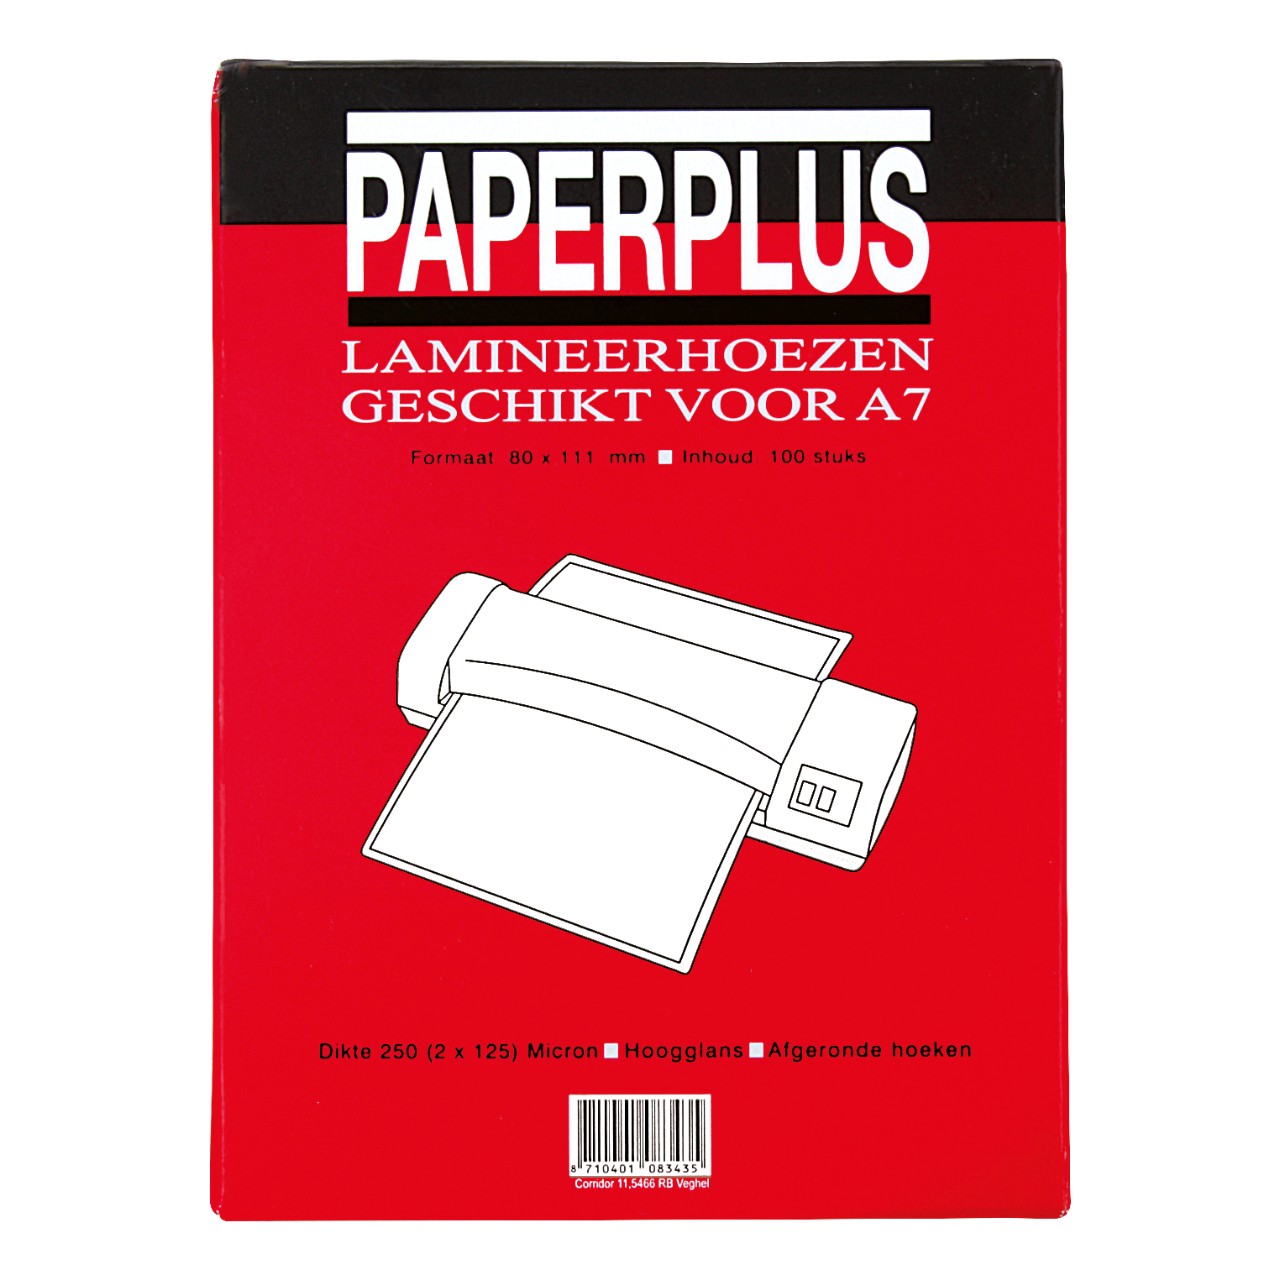 Openbaren Verder Verder Paperplus Lamineerhoes A7 2 x 125 micron Krimp 100 stuks | Sligro.nl